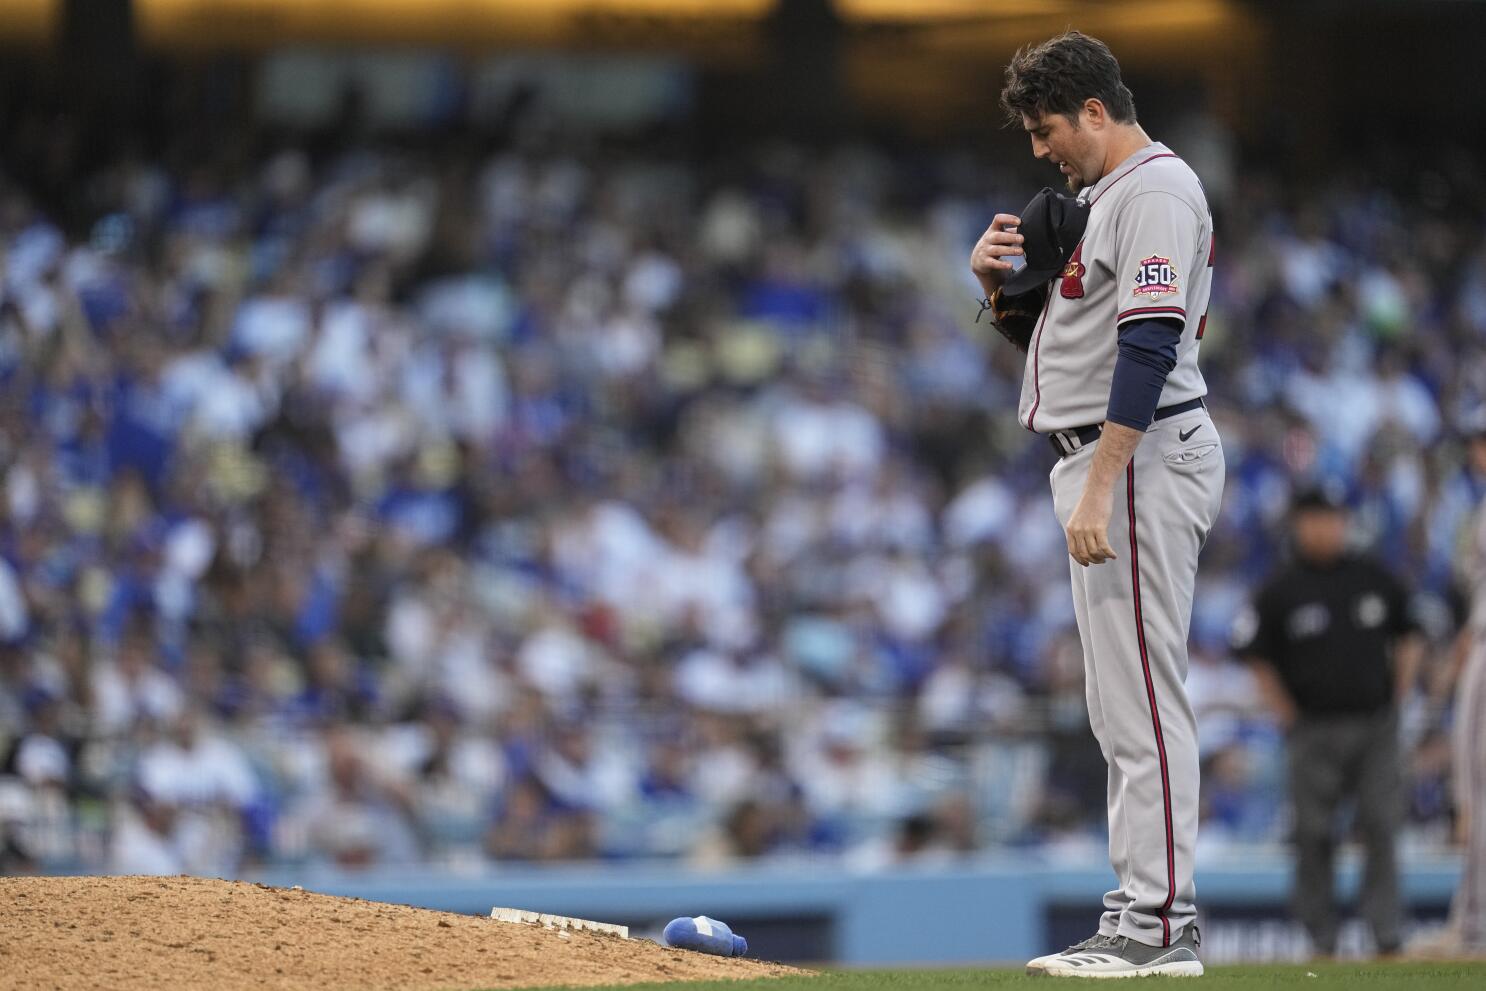 Dodgers' Freddie Freeman's heartfelt MLB All-Star Game thoughts